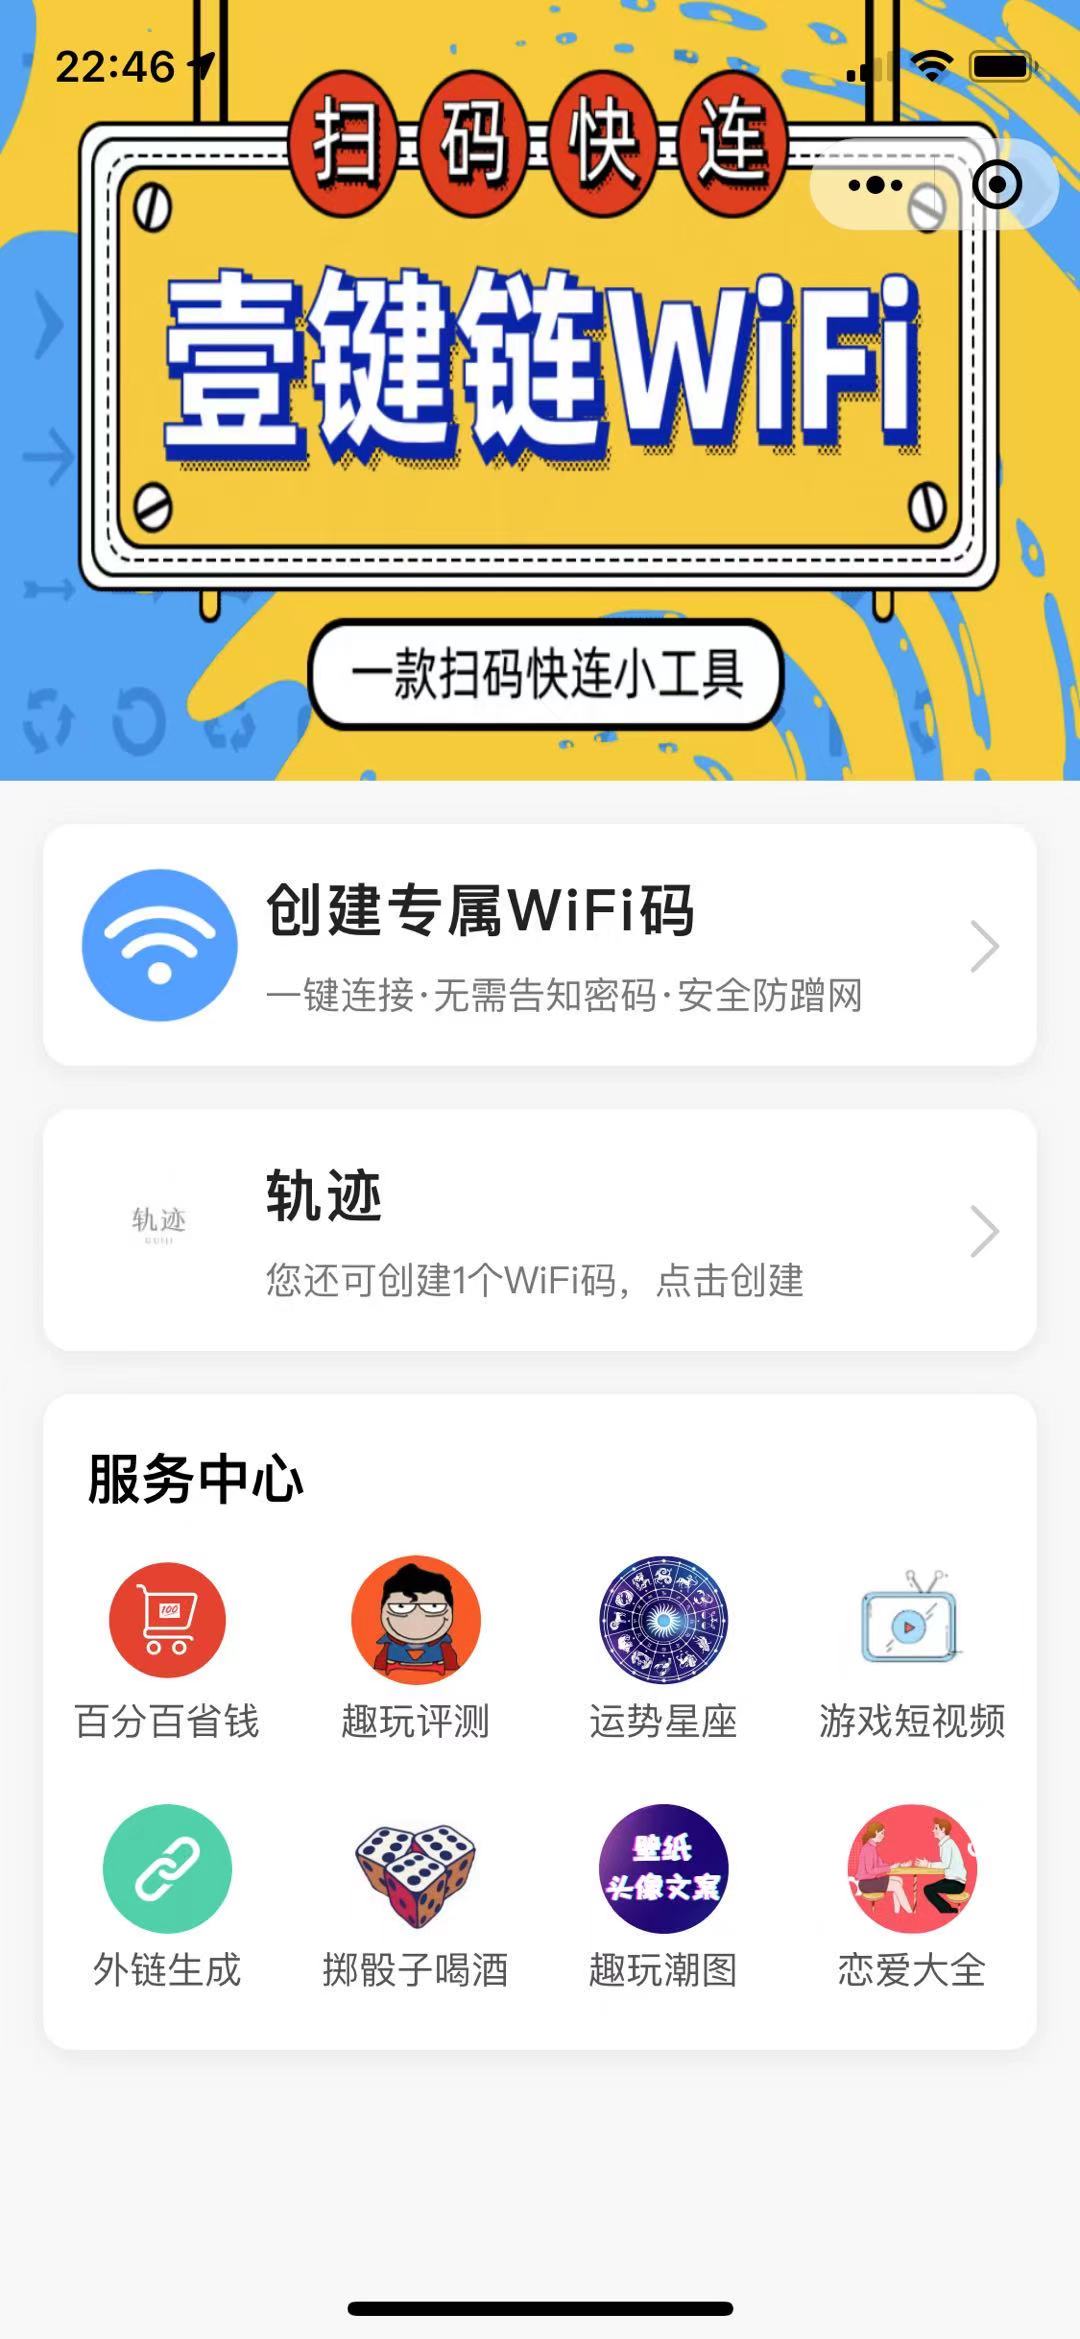 wifi营销王_wifi营销王小程序_wifi营销王微信小程序